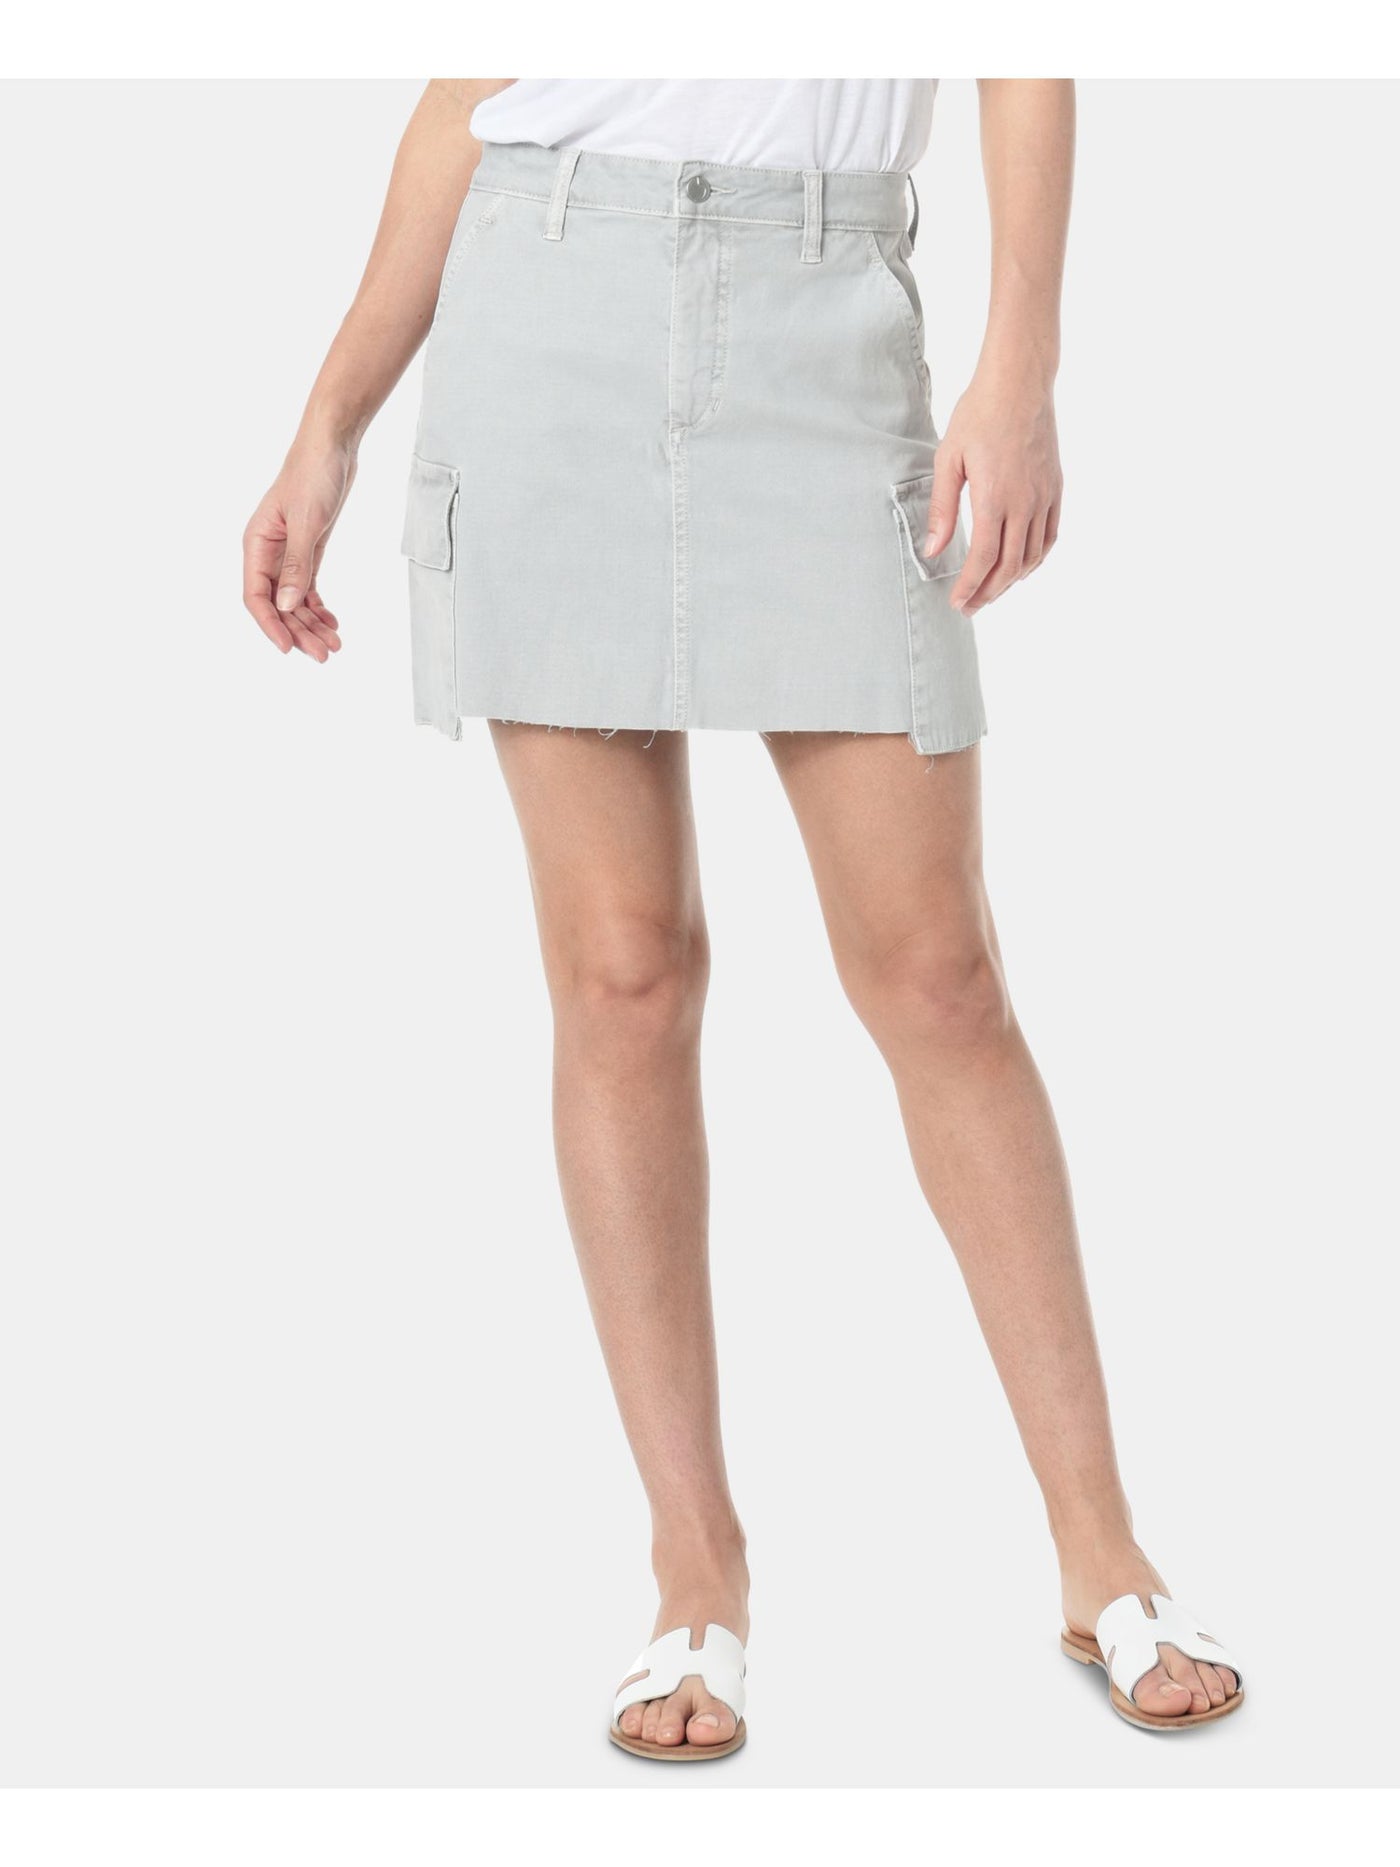 JOE'S Womens Gray Frayed Pocketed Mini Skirt 24 Waist